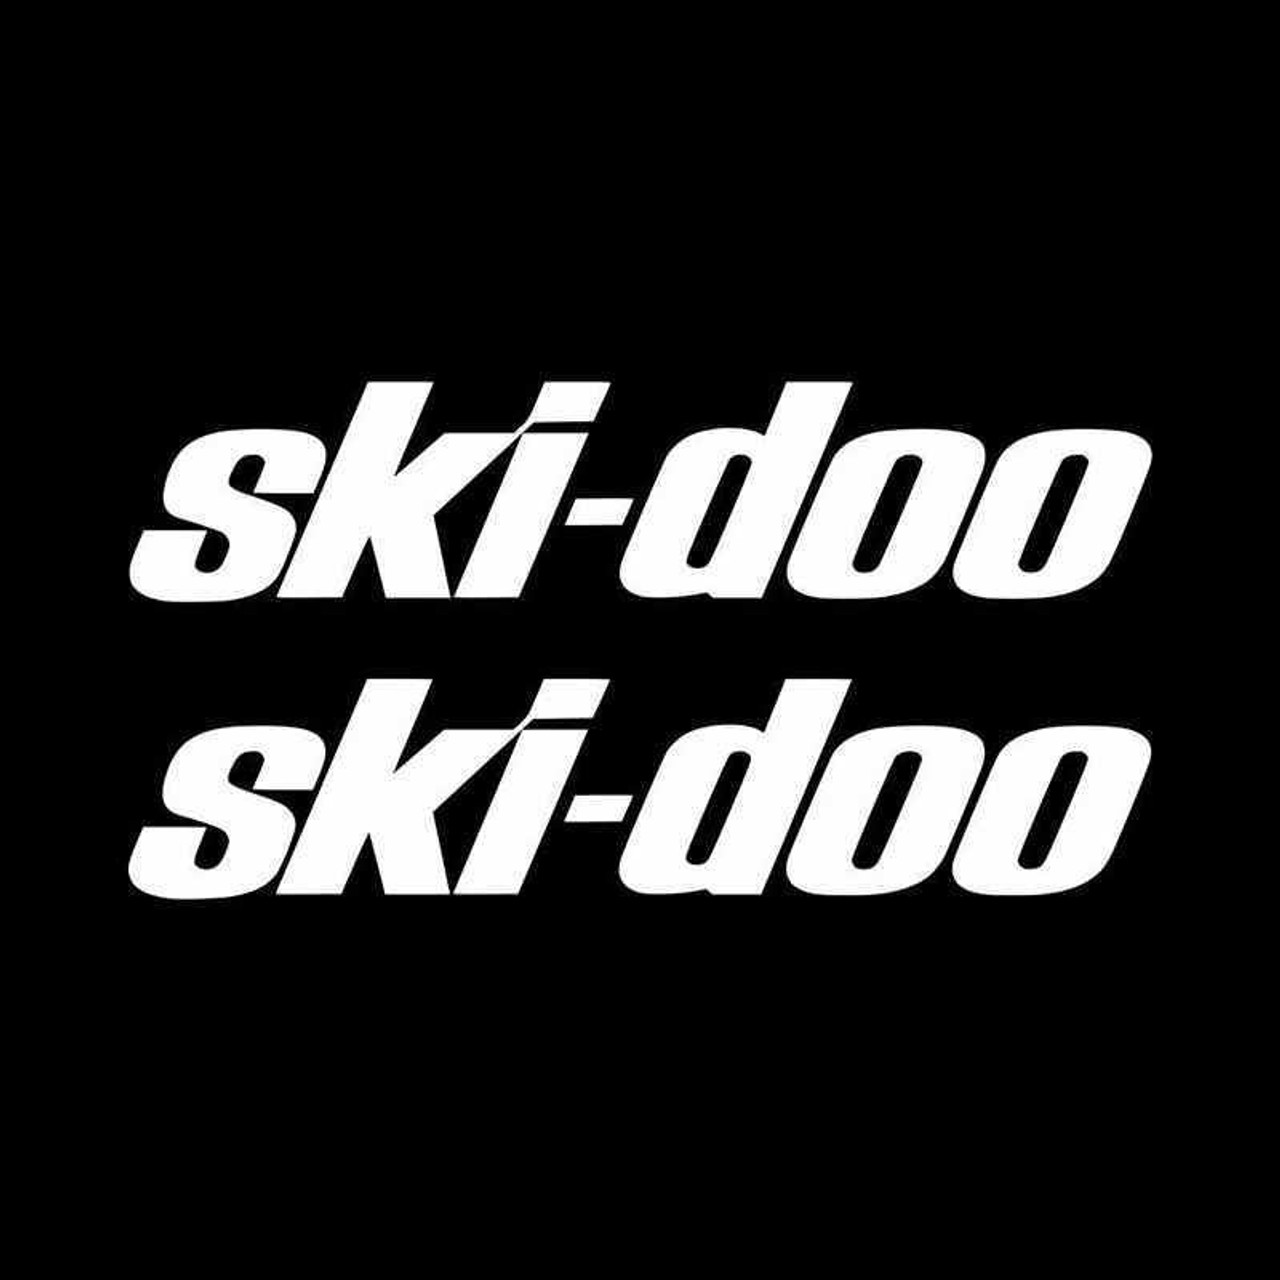 Ski Dooo Logo Vinyl Decal Sticker